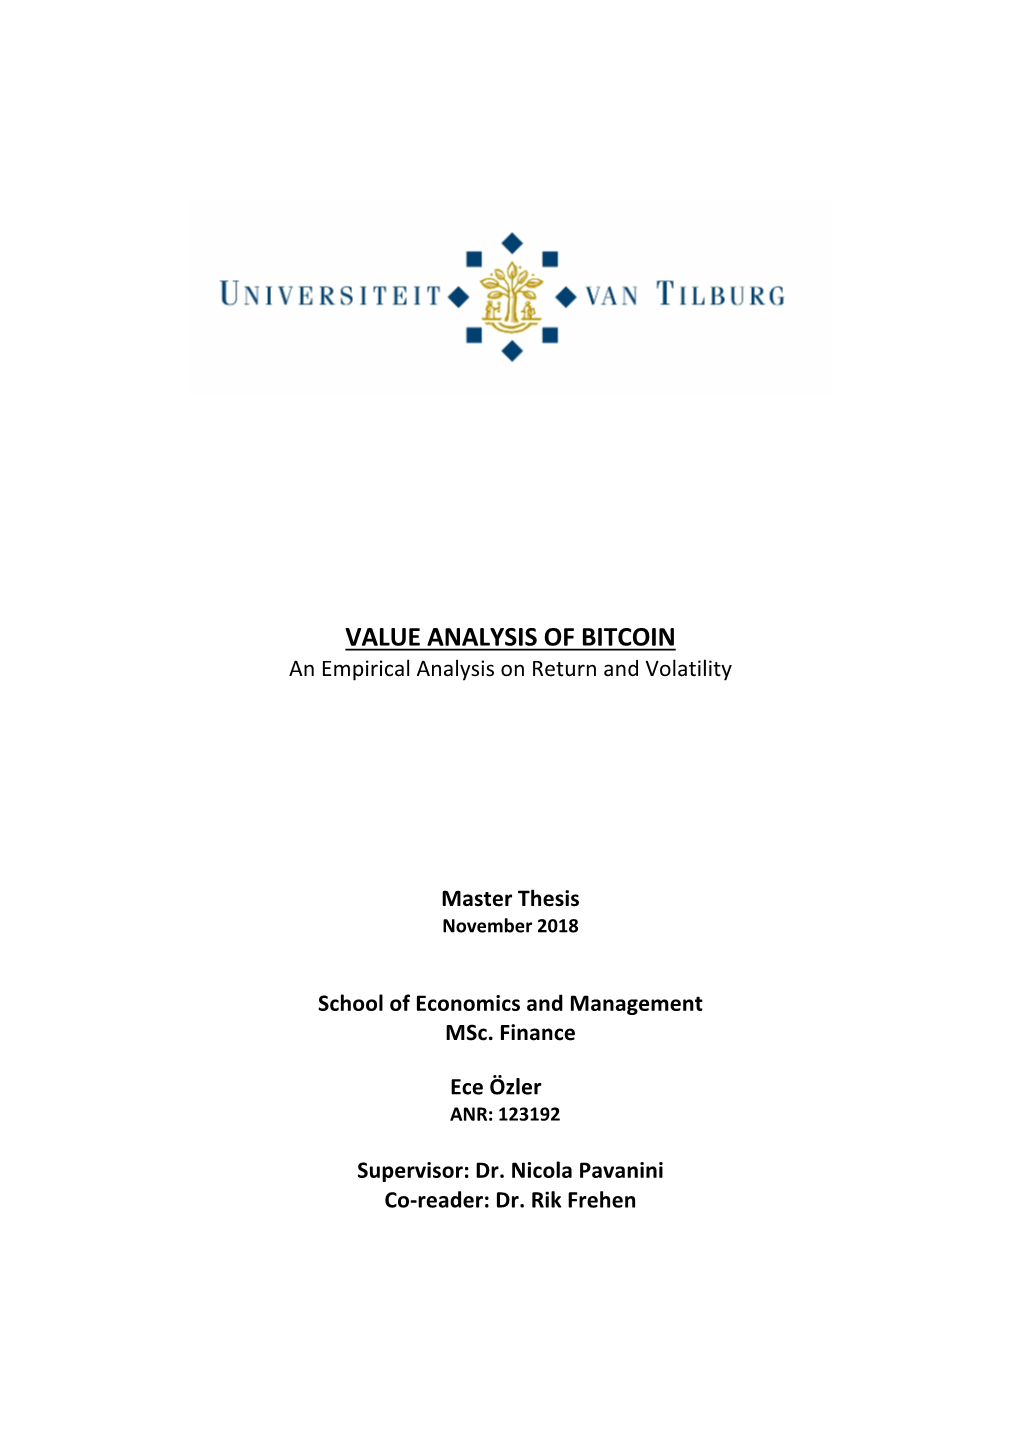 VALUE ANALYSIS of BITCOIN an Empirical Analysis on Return and Volatility